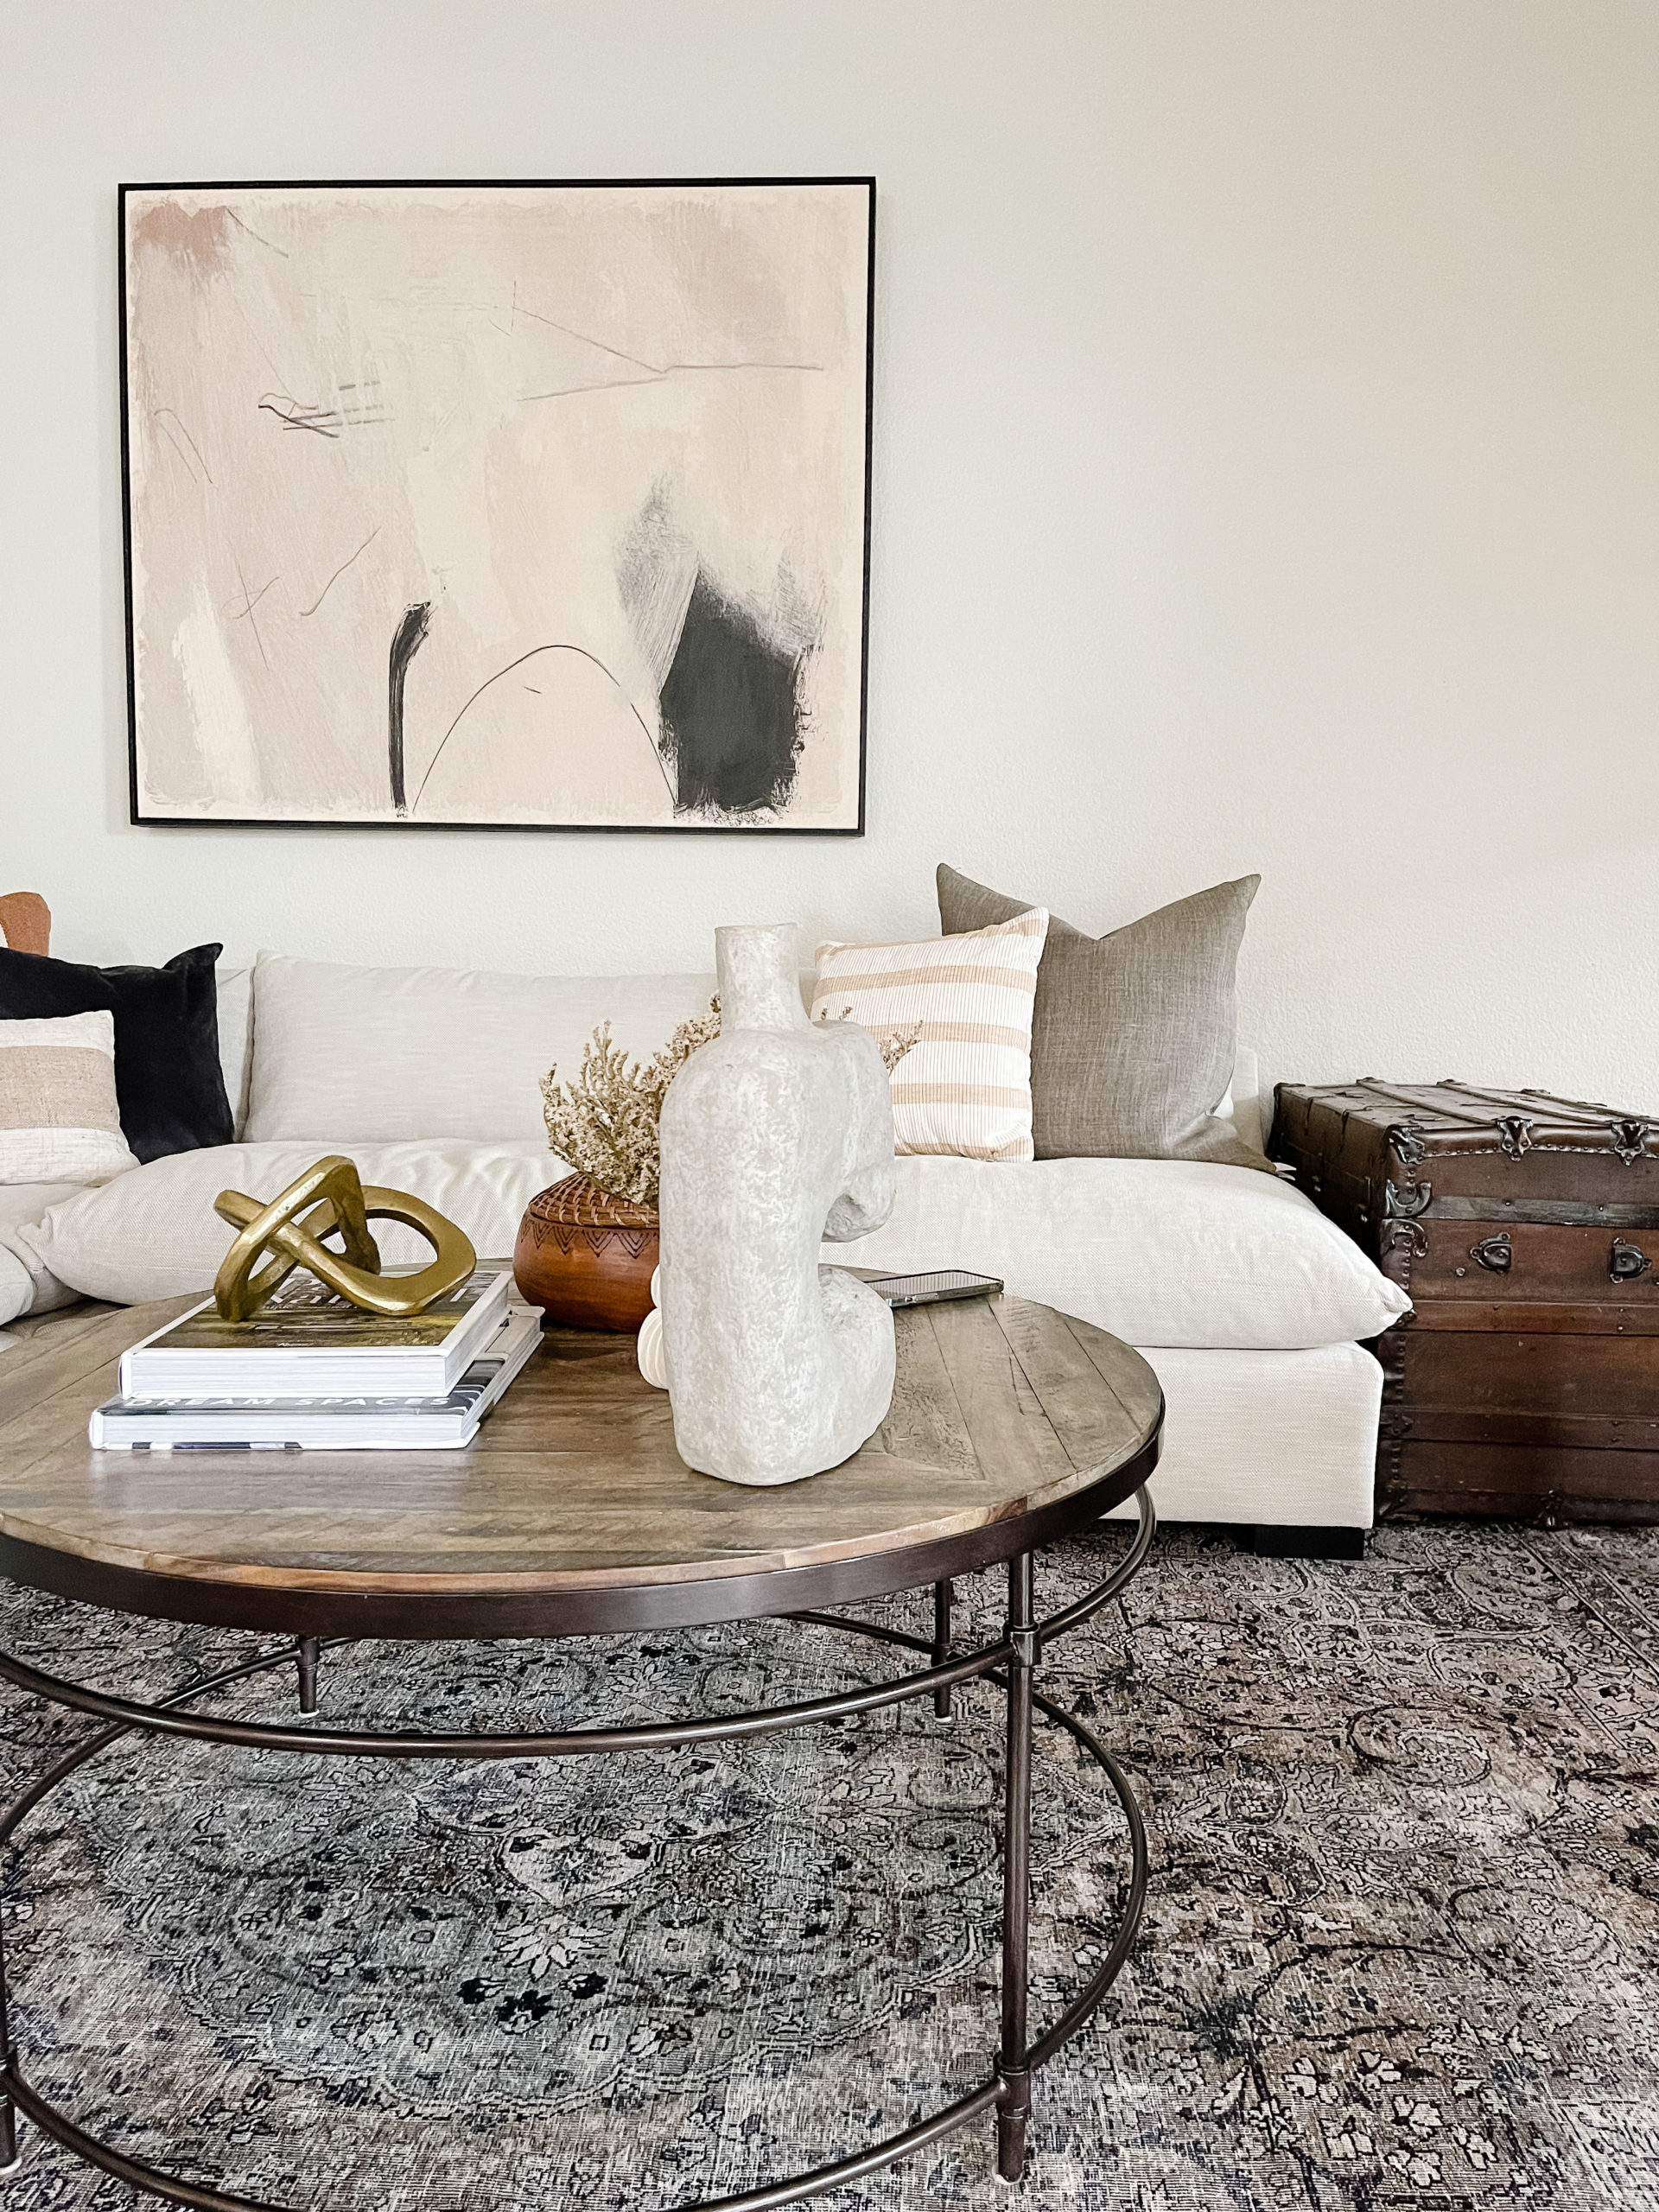 Livingroom decor #interiordesign #2022decor #earthytones #naturalmaterials #homedecor #2022hometrends #design